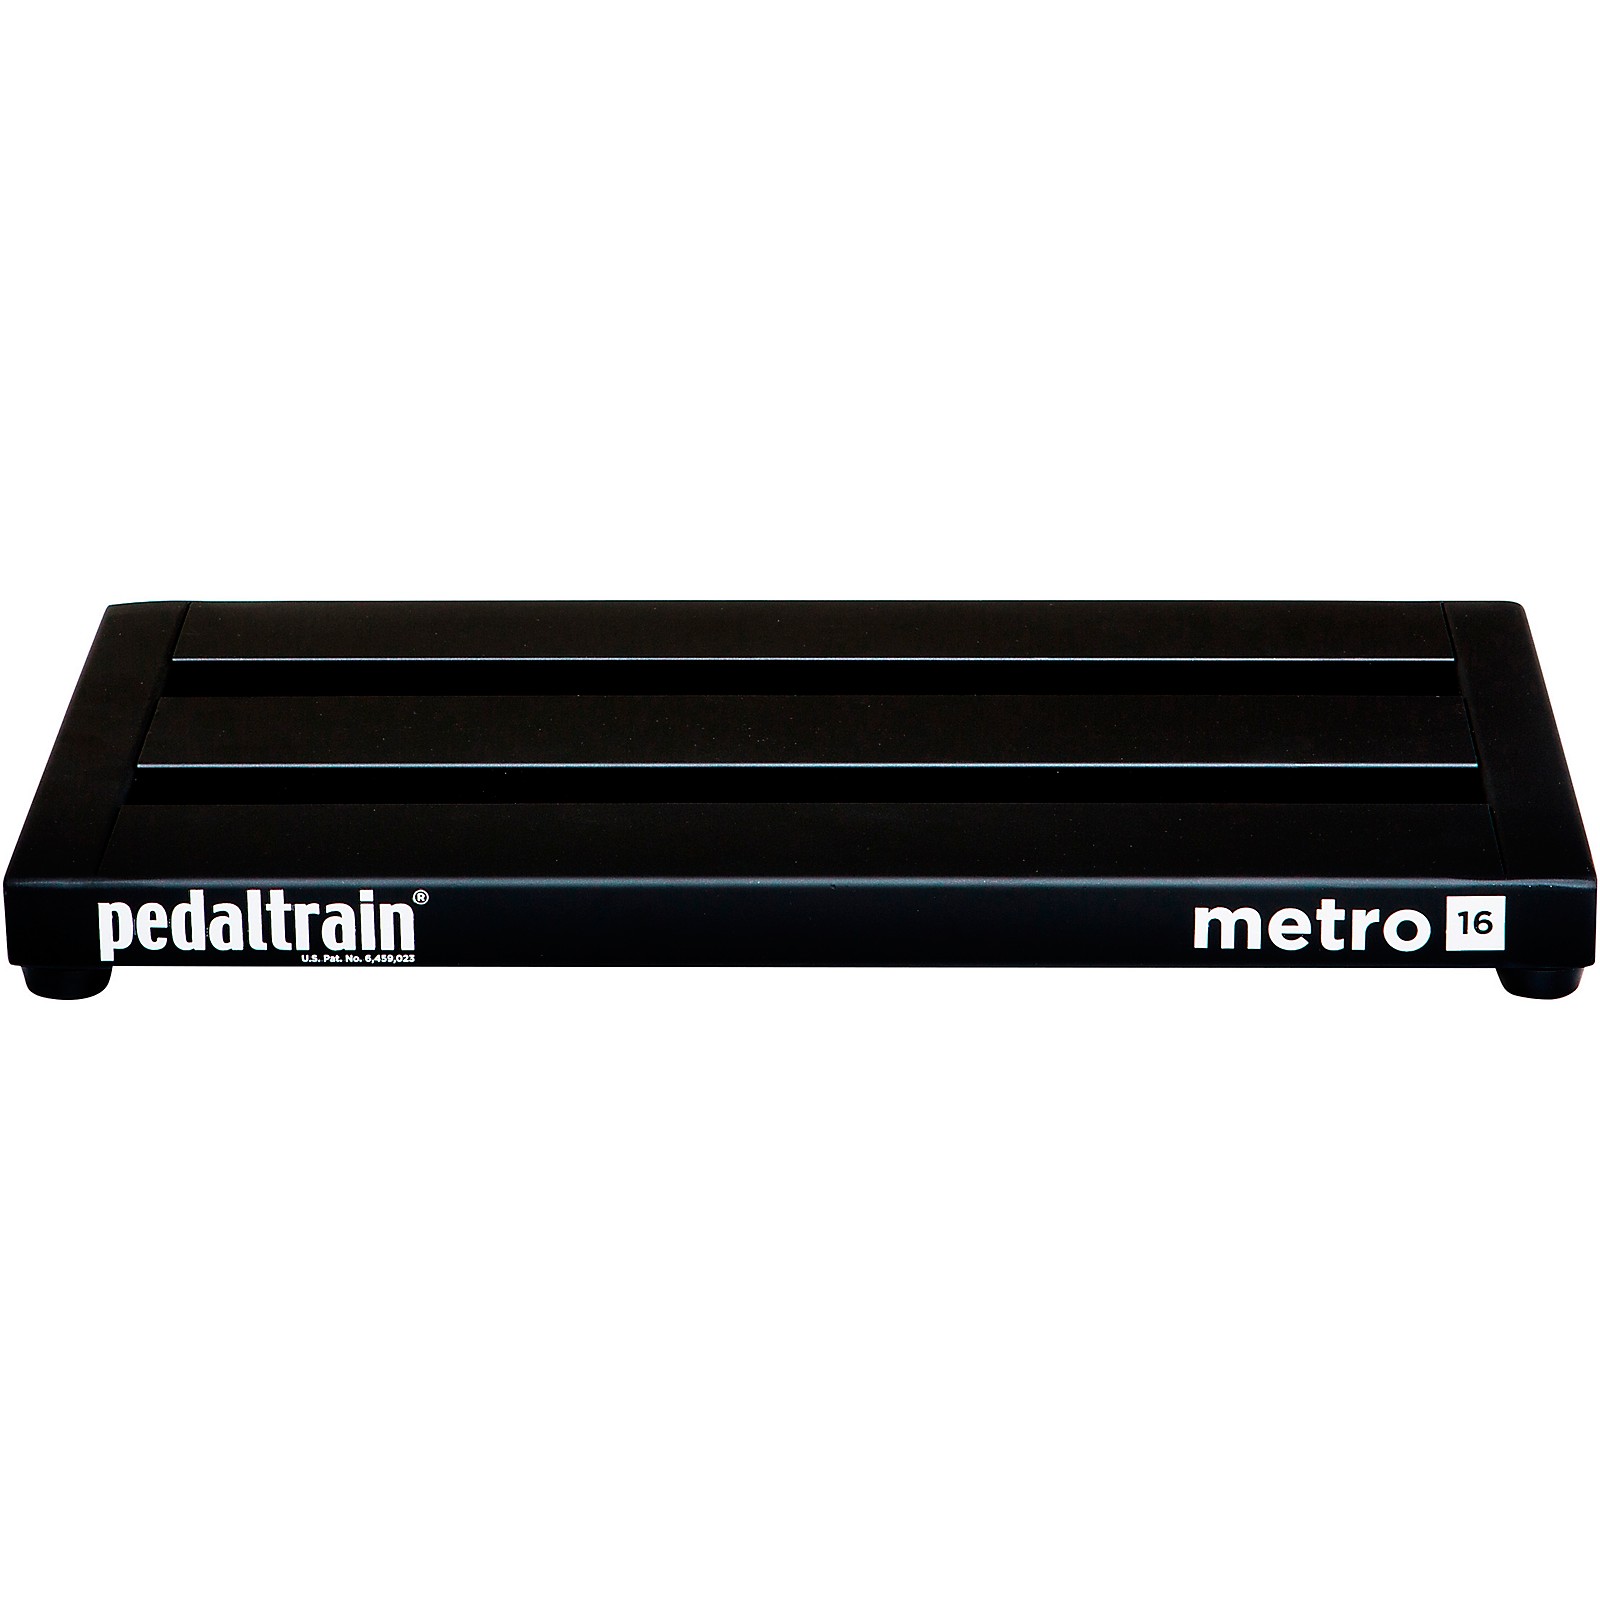 Pedaltrain Metro 16 Pedalboard with Soft Case | Guitar Center